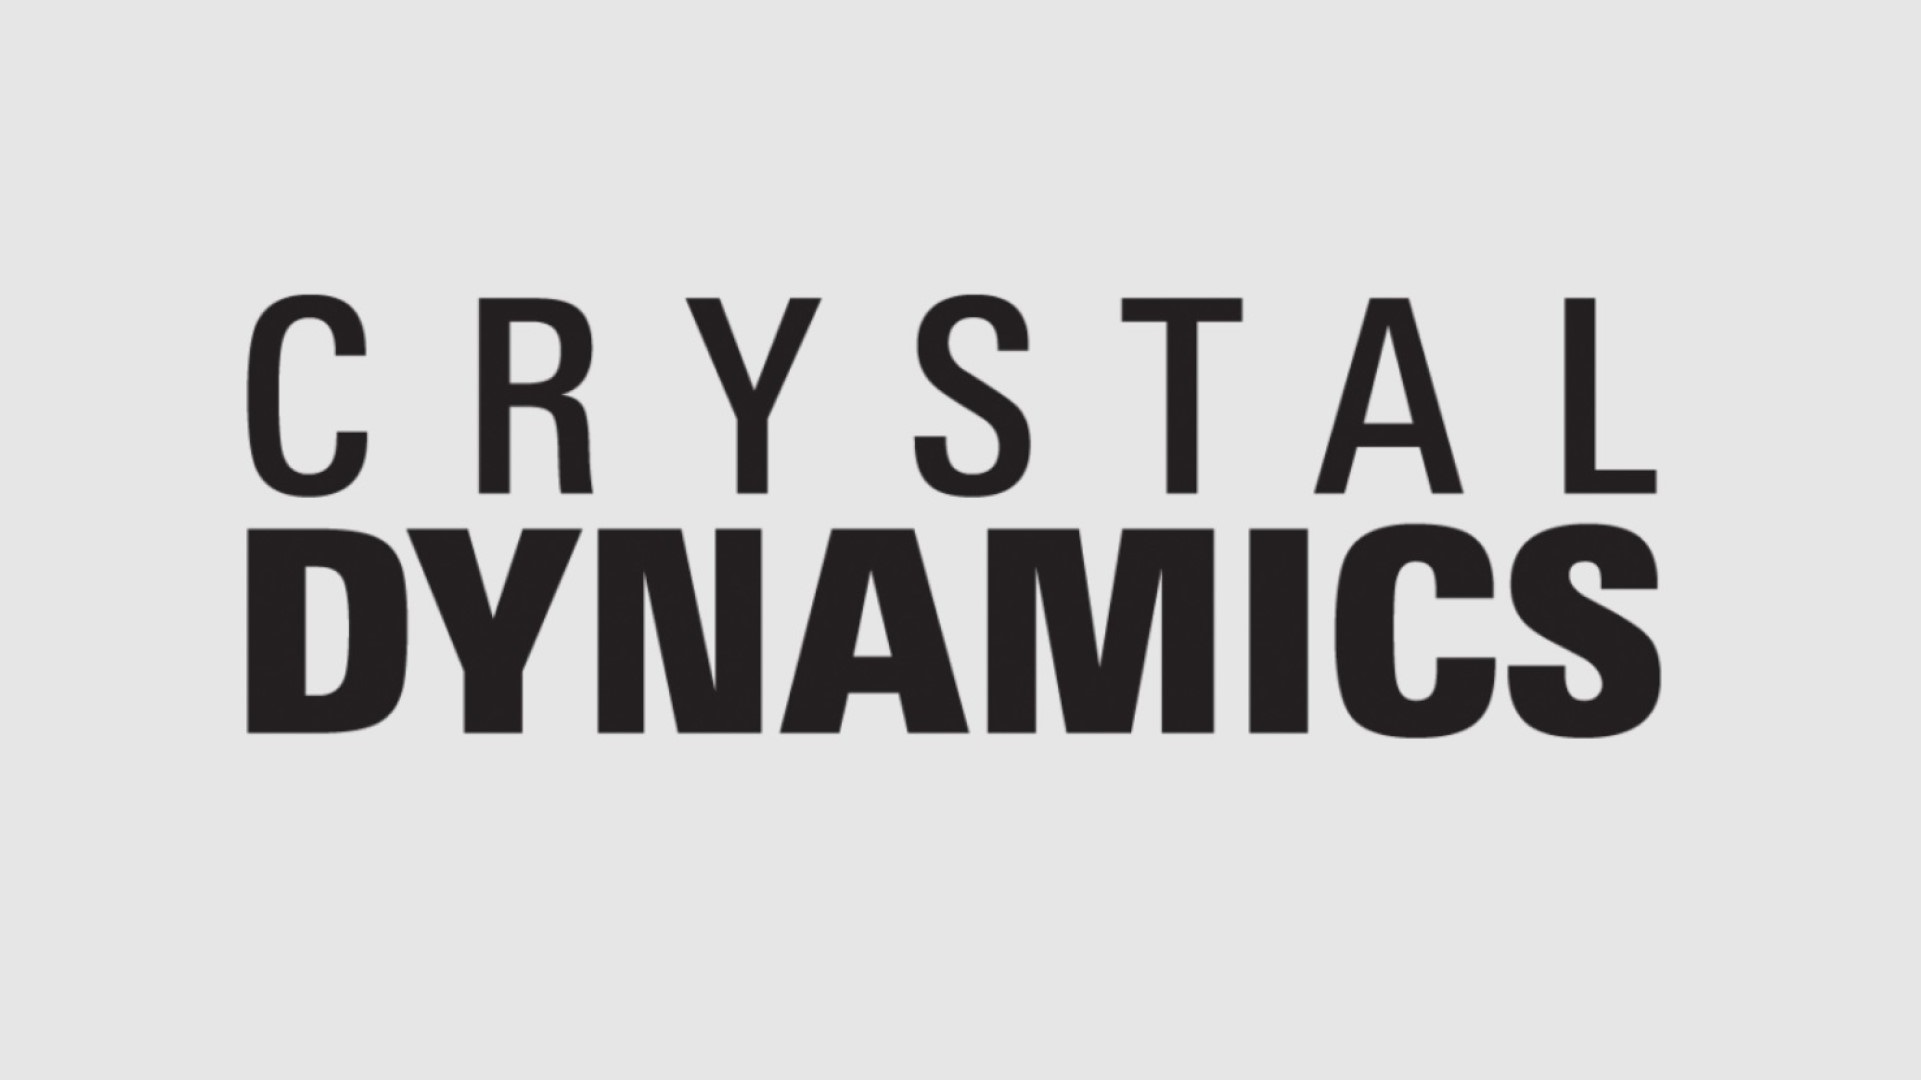 Suaicheantas Crystal Dynamics